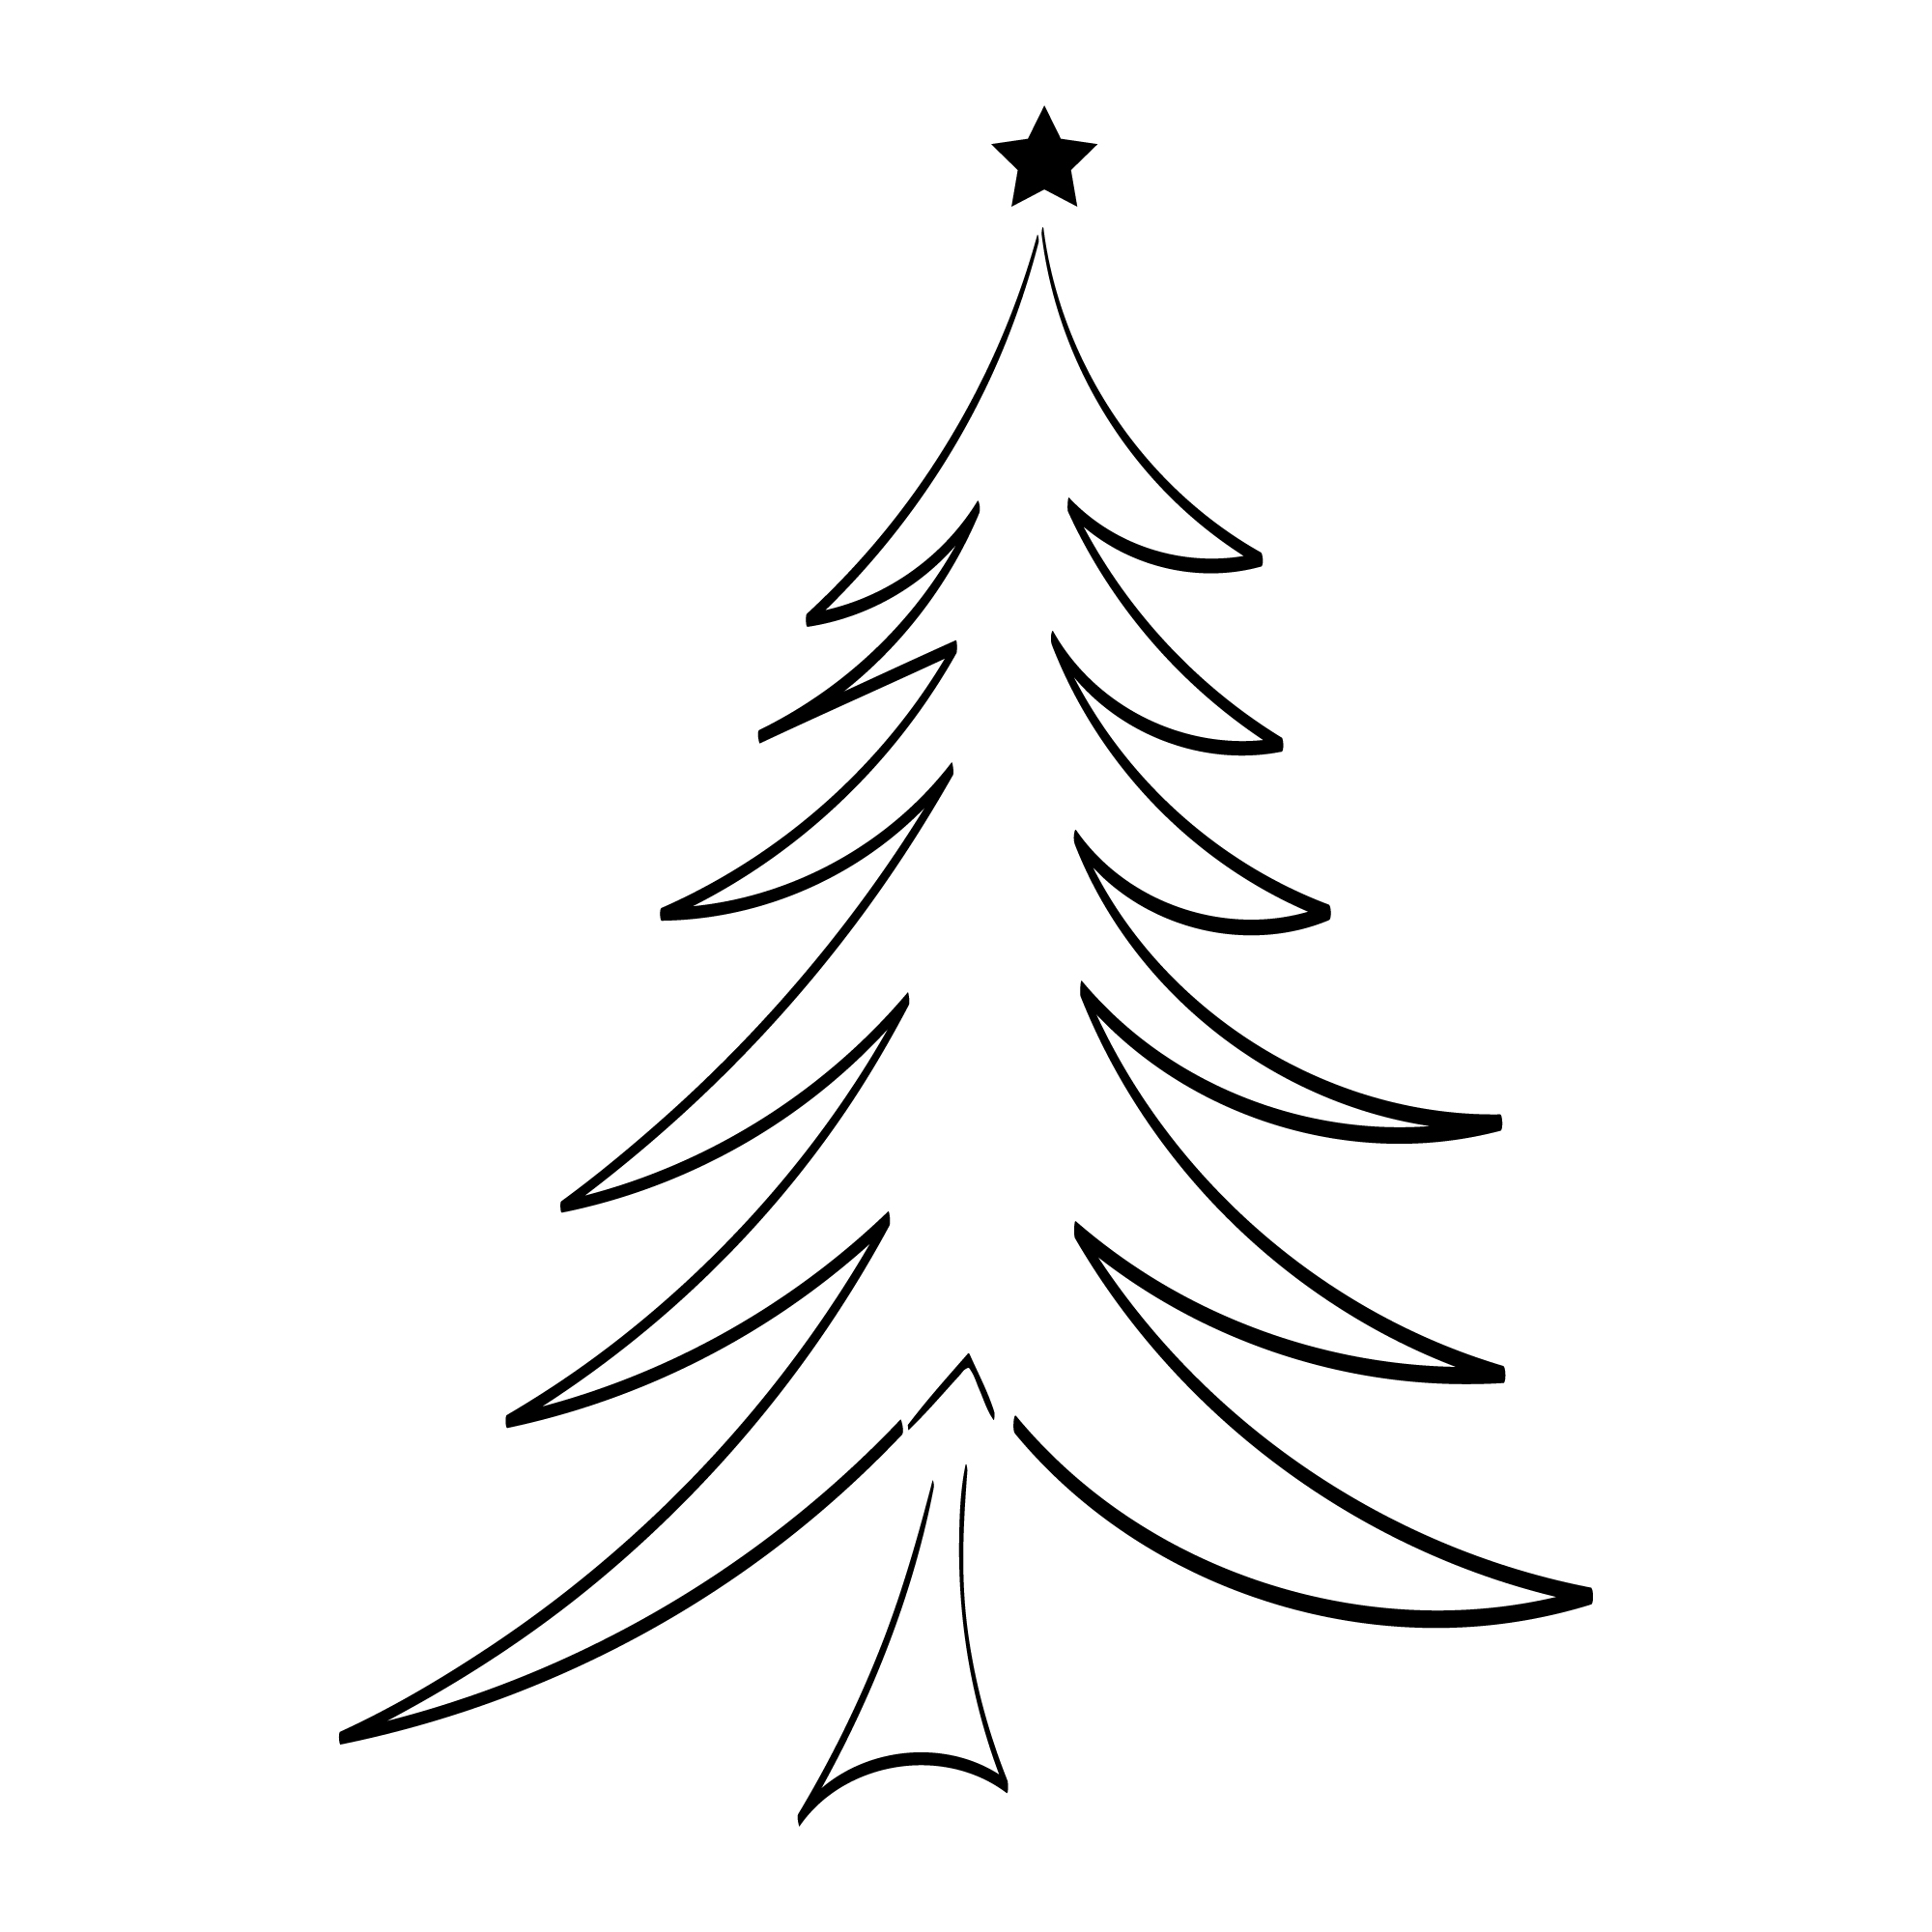 Modern Christmas Tree Design preview image.